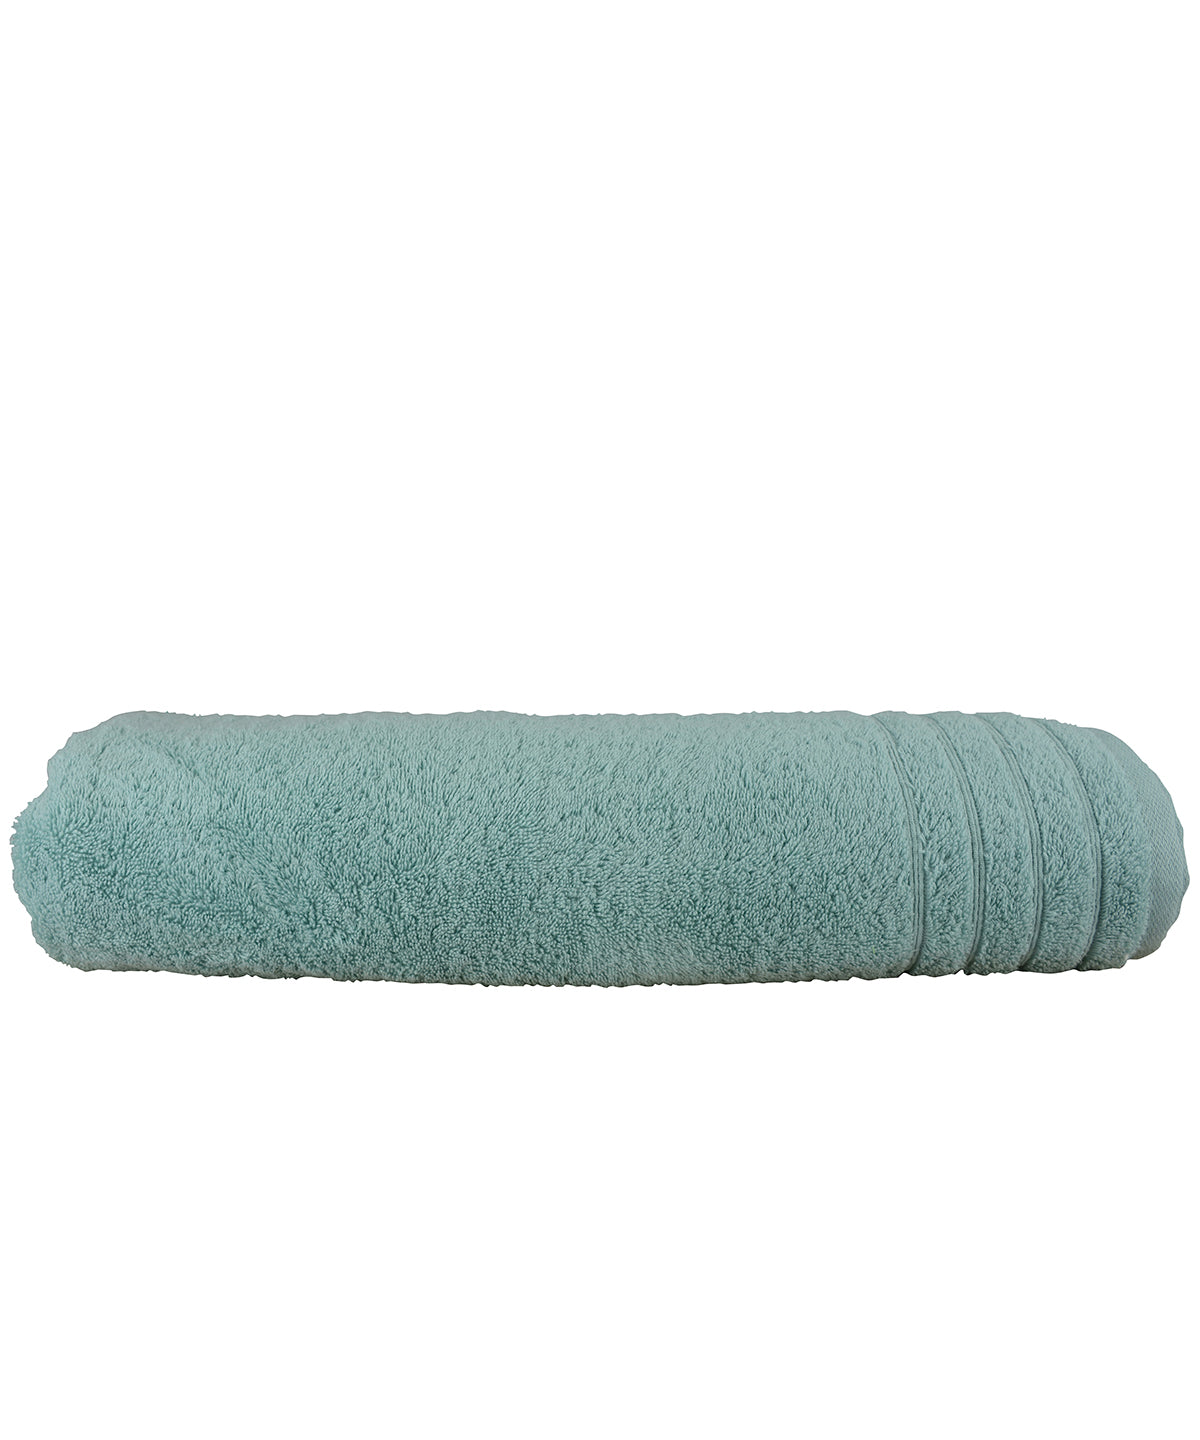 Personalised Towels - Light Green A&R Towels ARTG® Organic beach towel